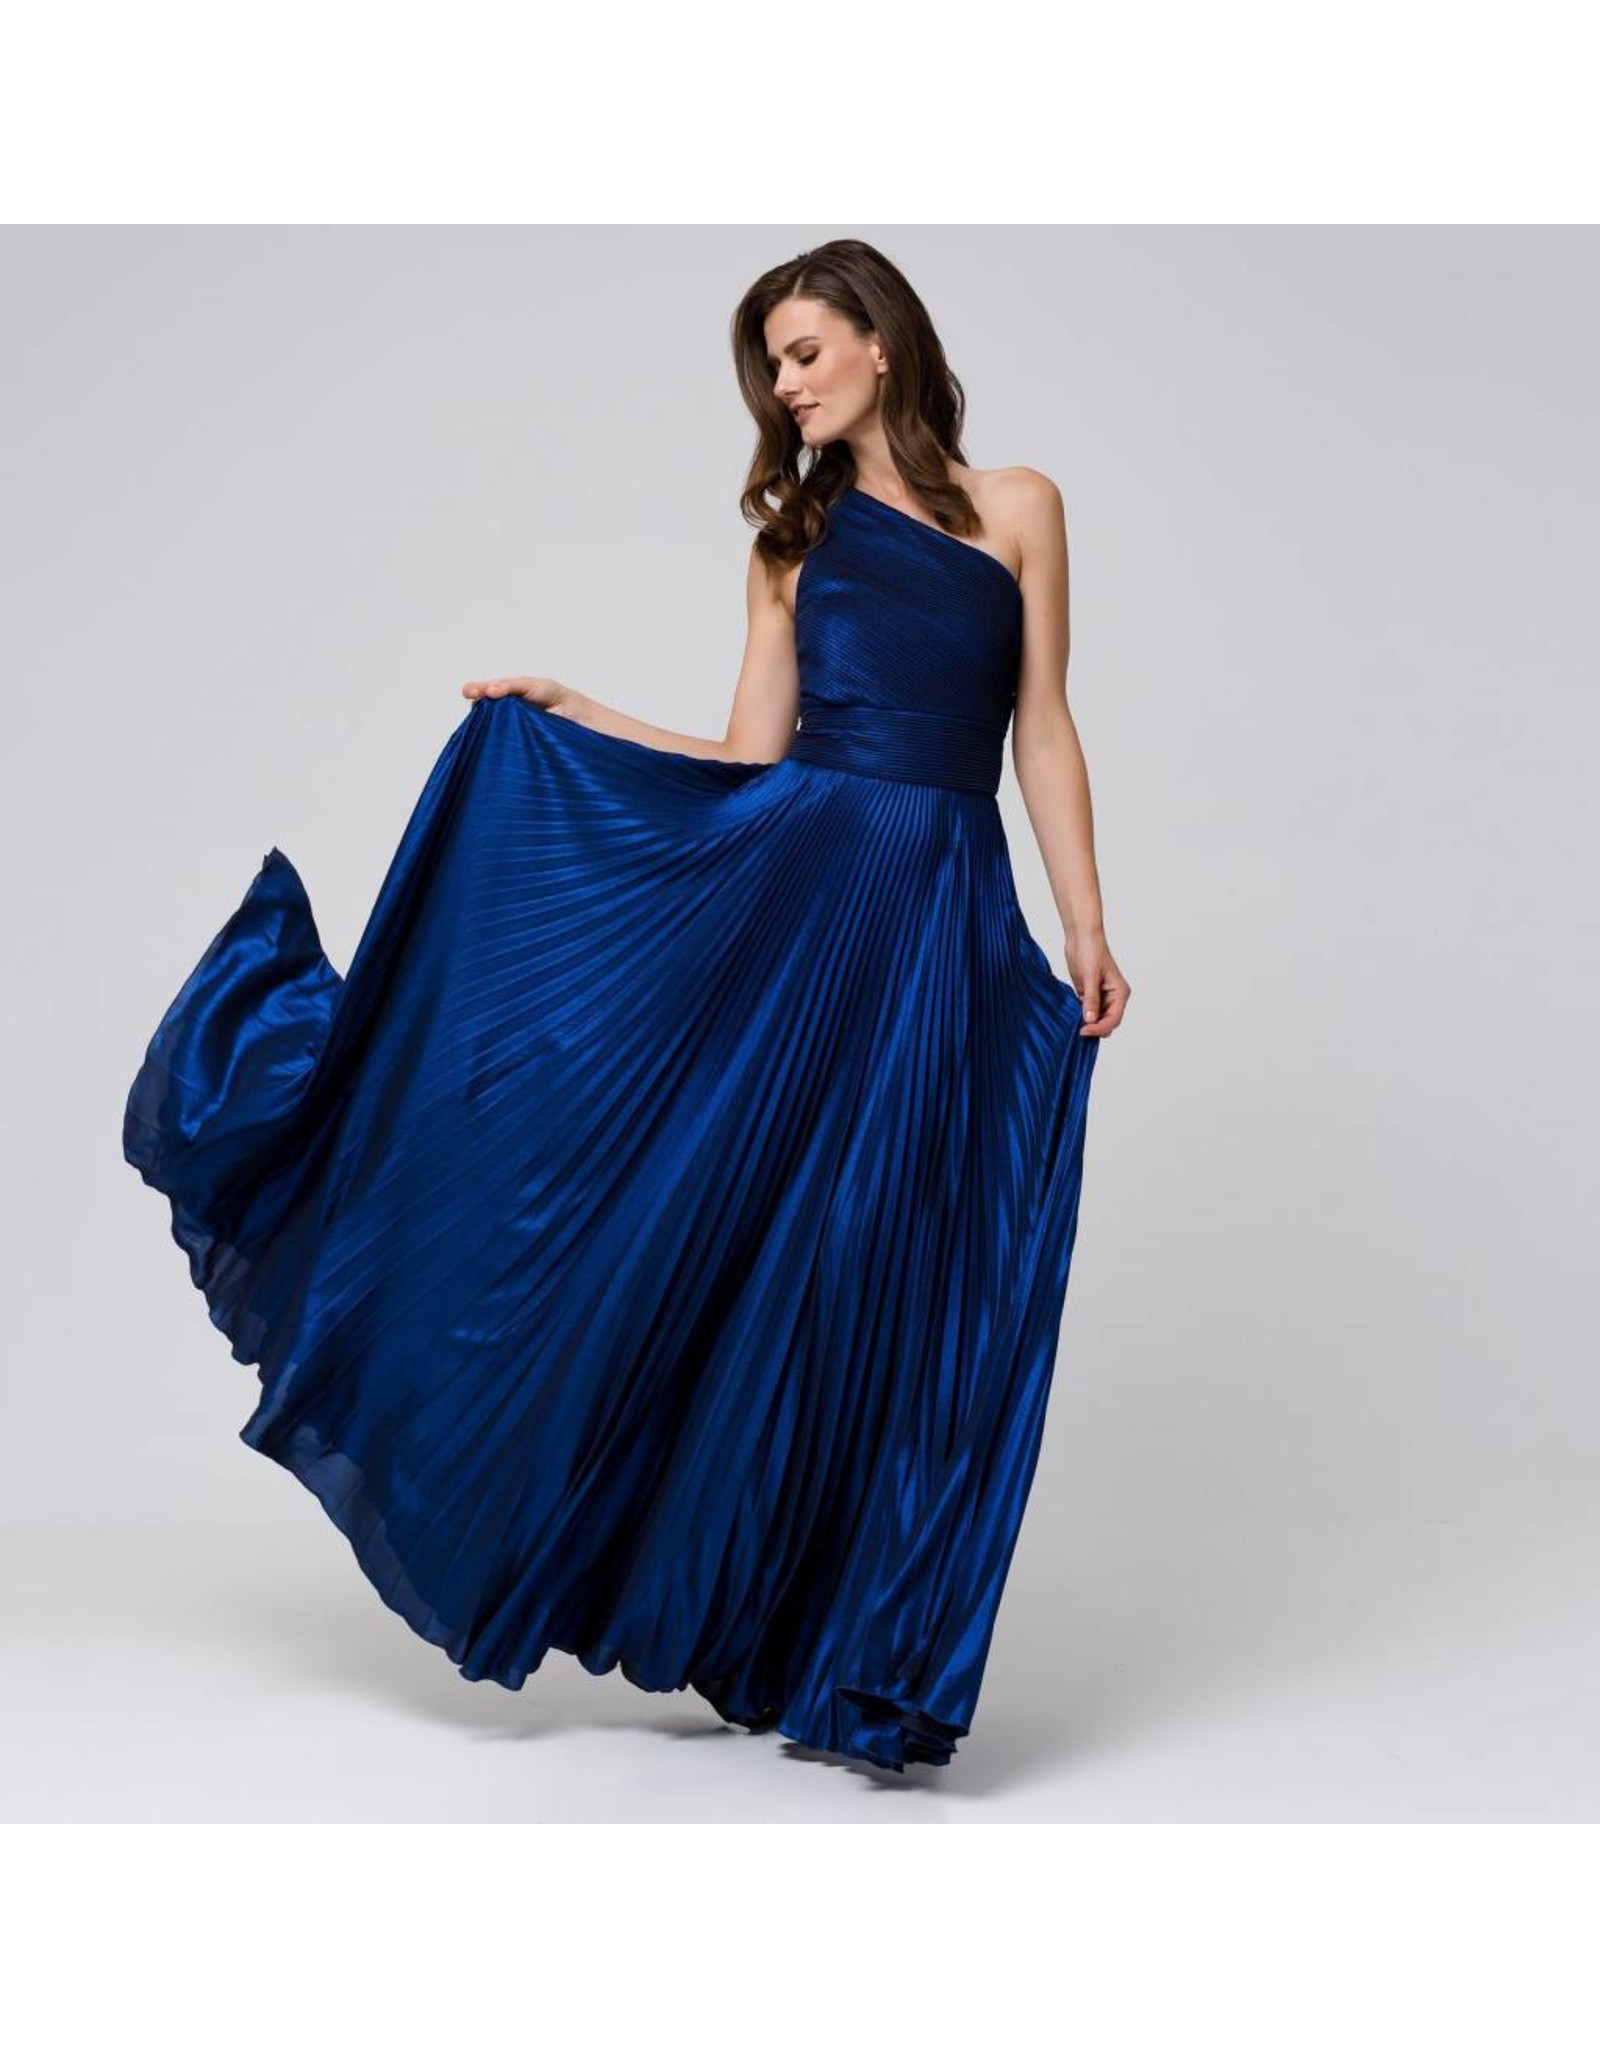 Access Abee Fashion Maxi one shoulder glitter moussline pleated dress